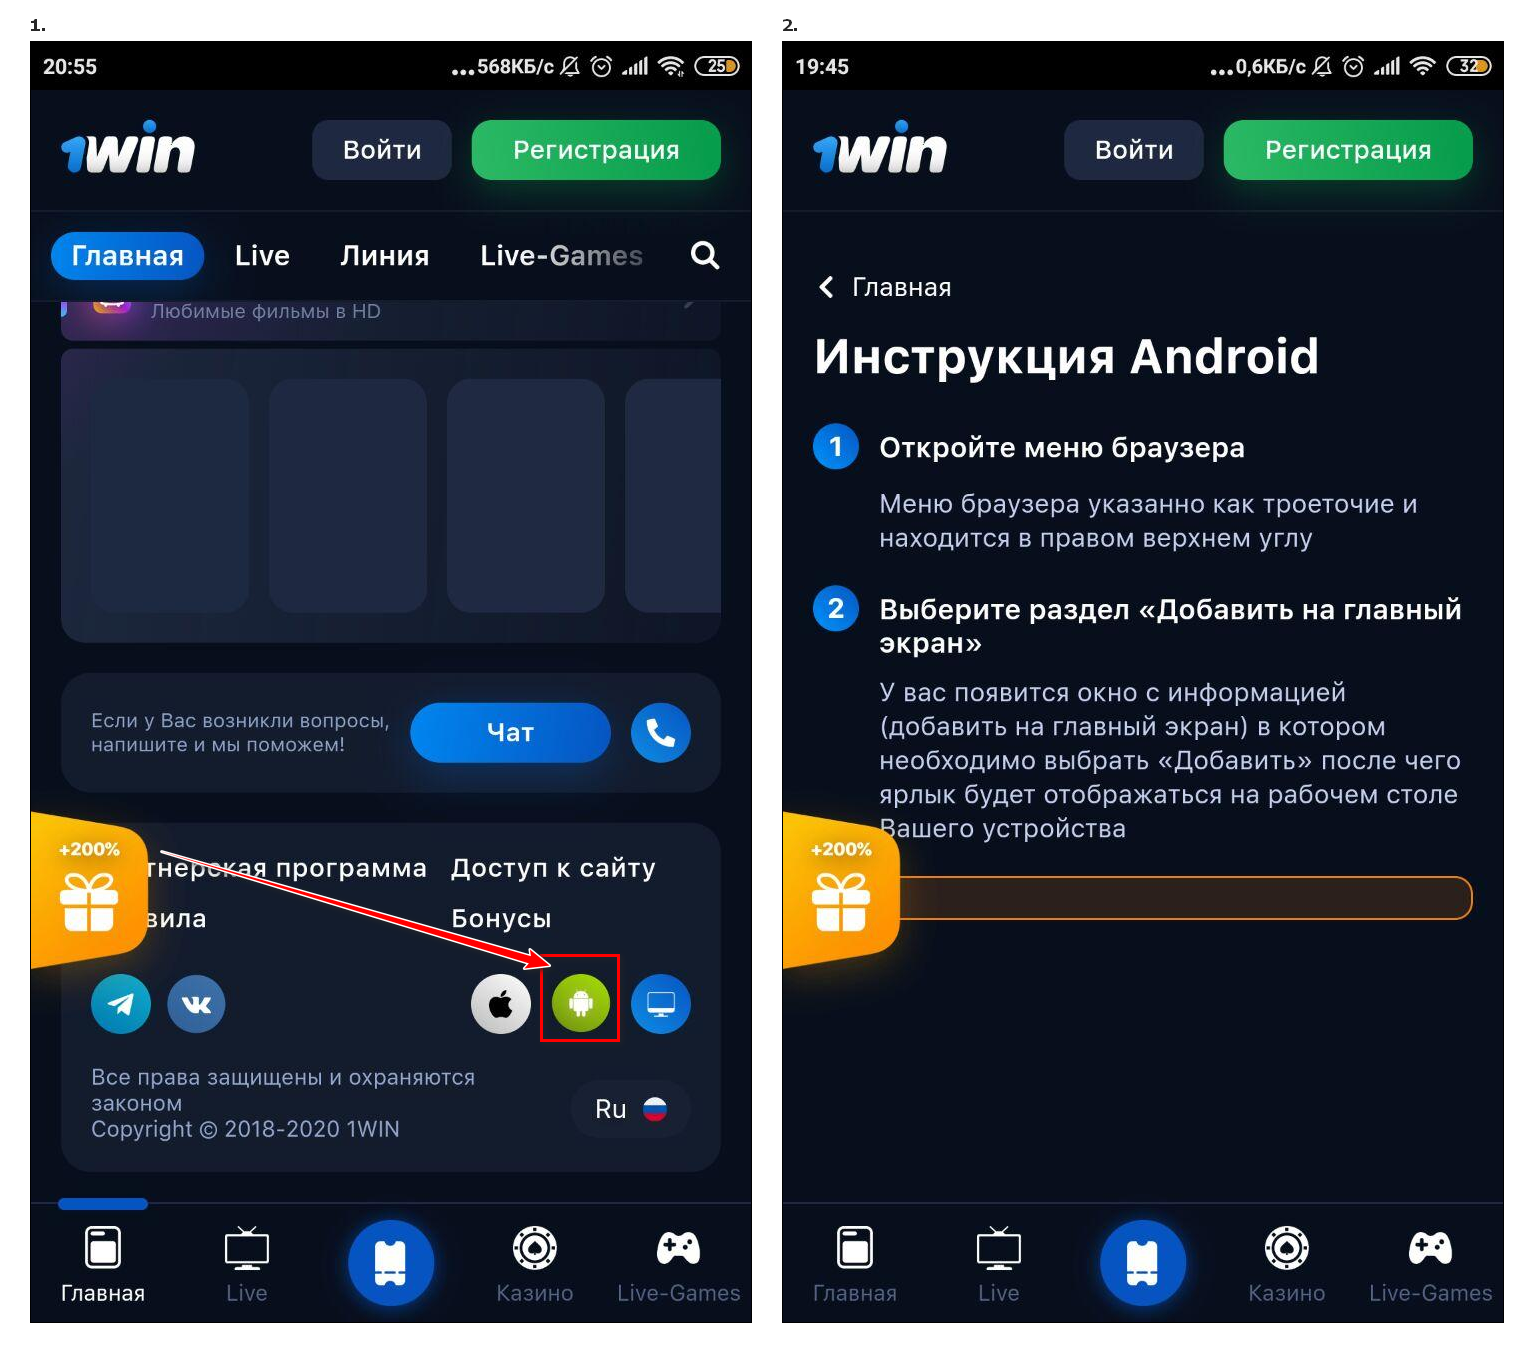 1win приложение 1win official new l xyz. 1вин приложение. Андроид 1.